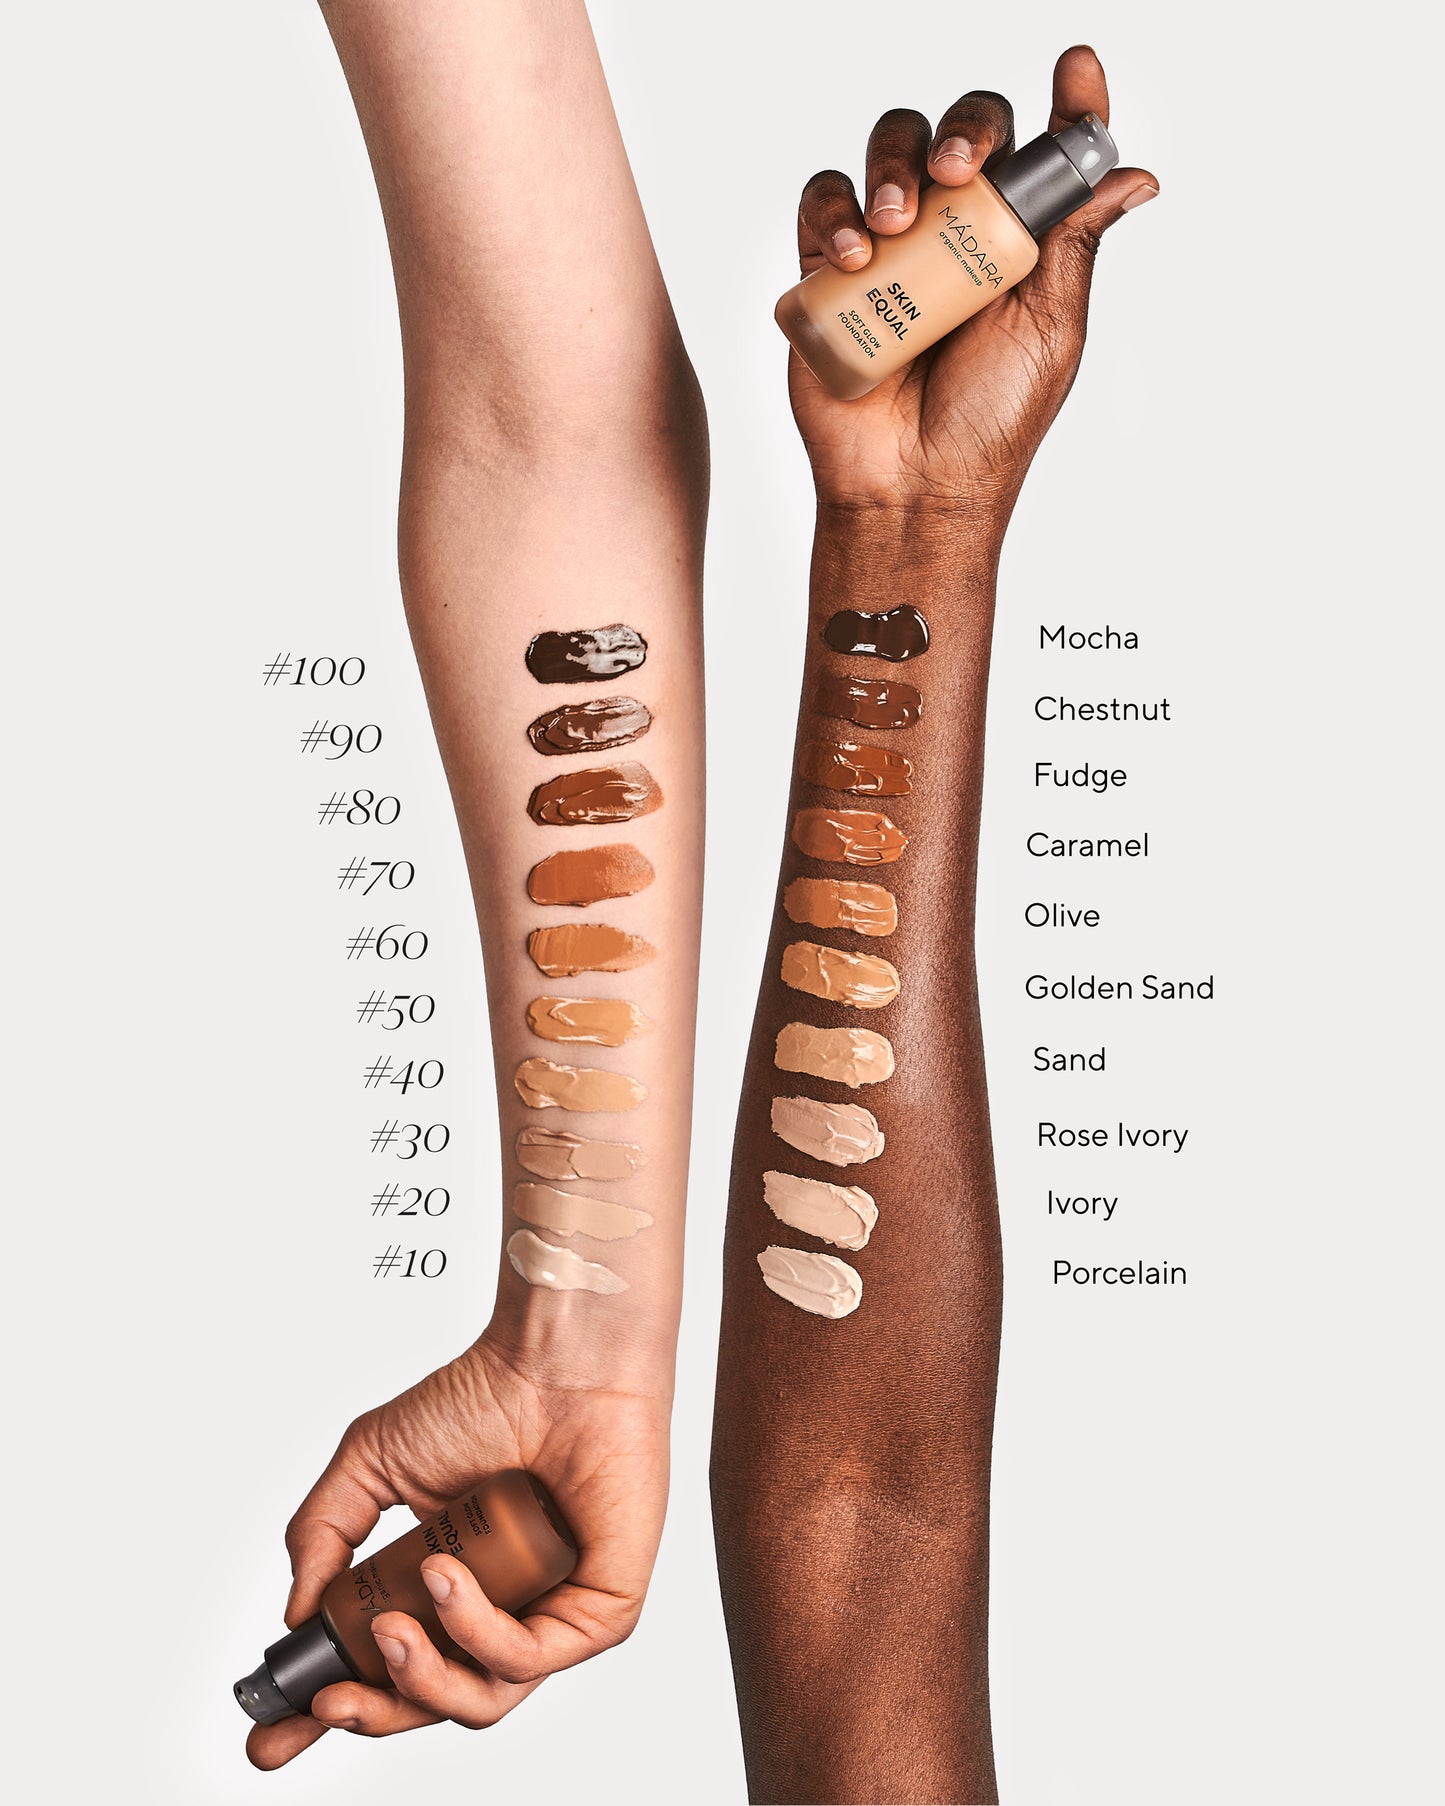 Madara Skin Equal Foundation #90 Chestnut, 30 ml